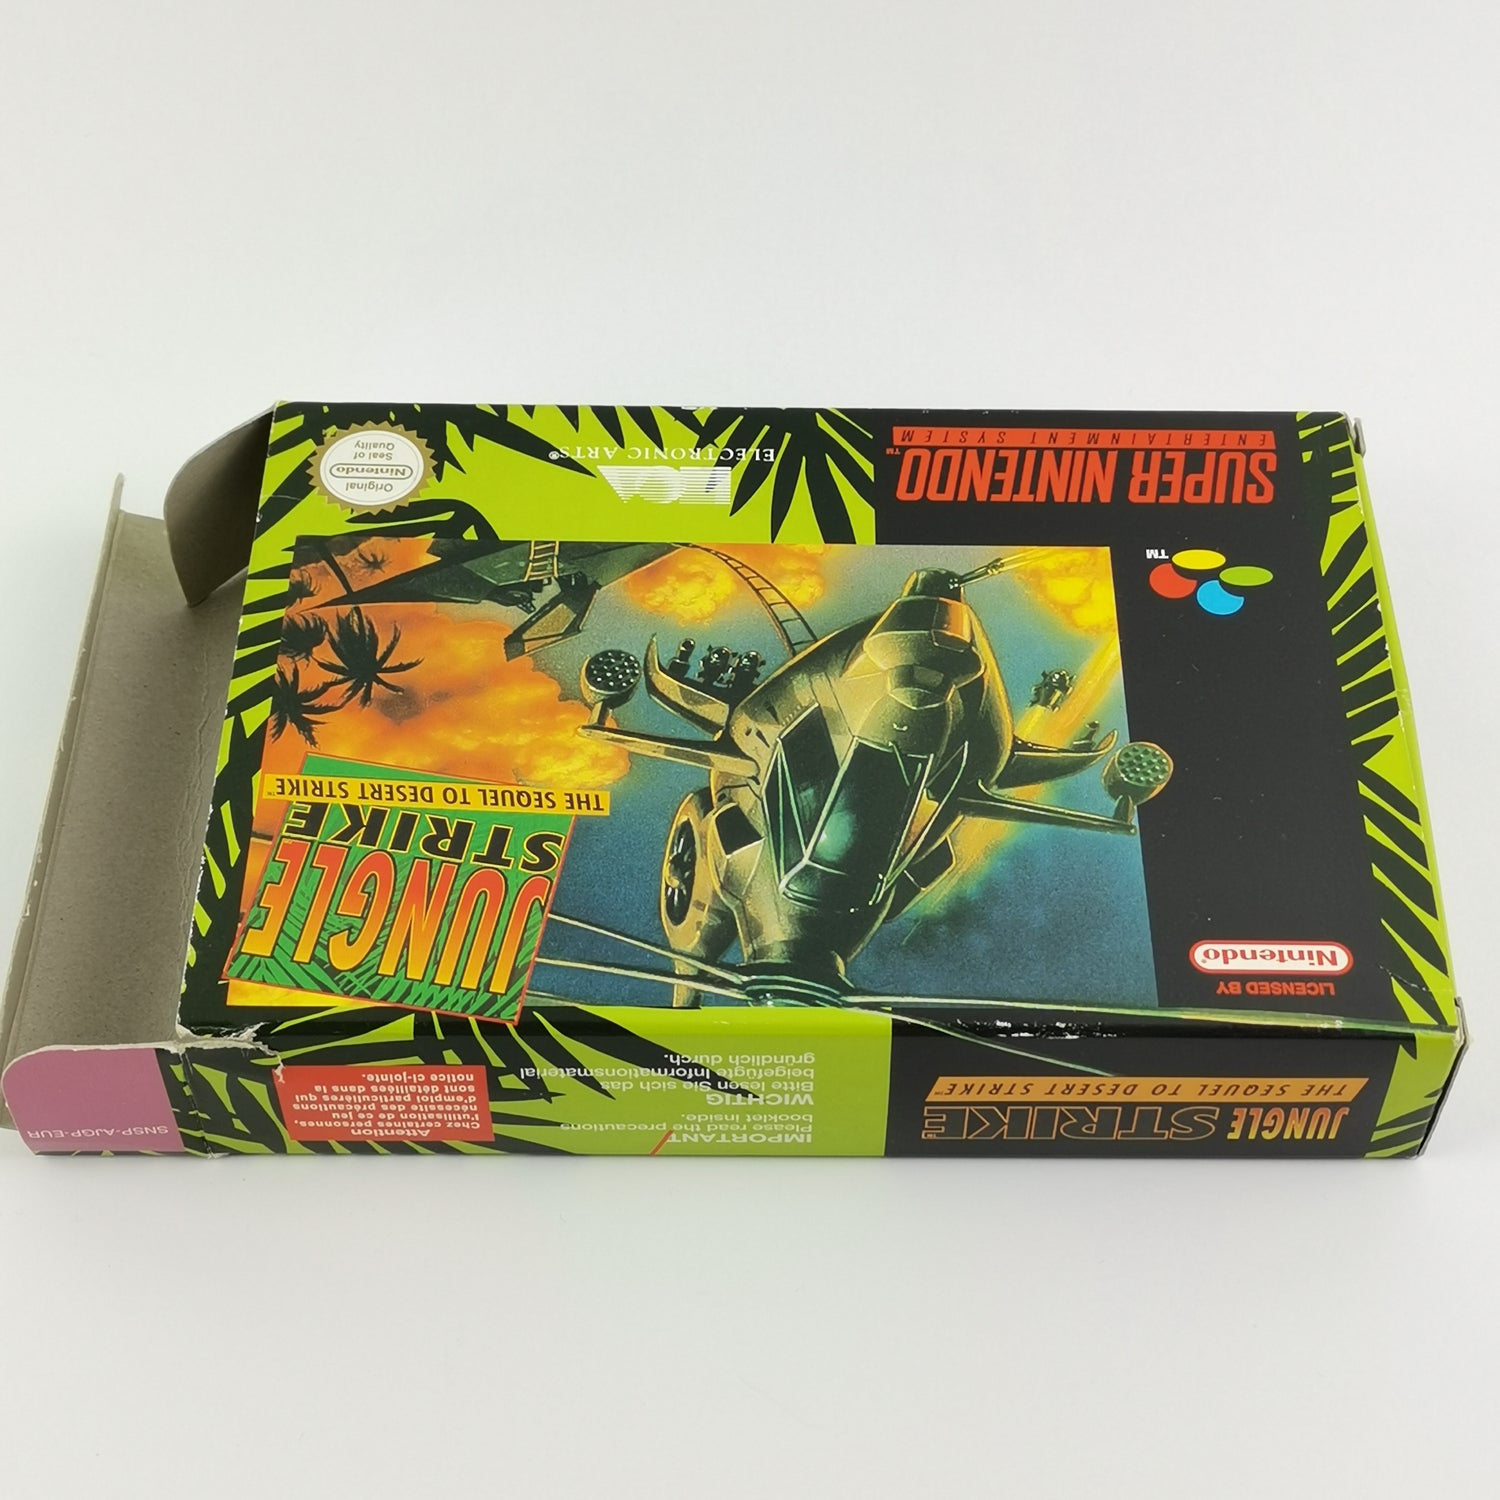 Super Nintendo game: Jungle Strike - original packaging and instructions PAL | SNES EUR